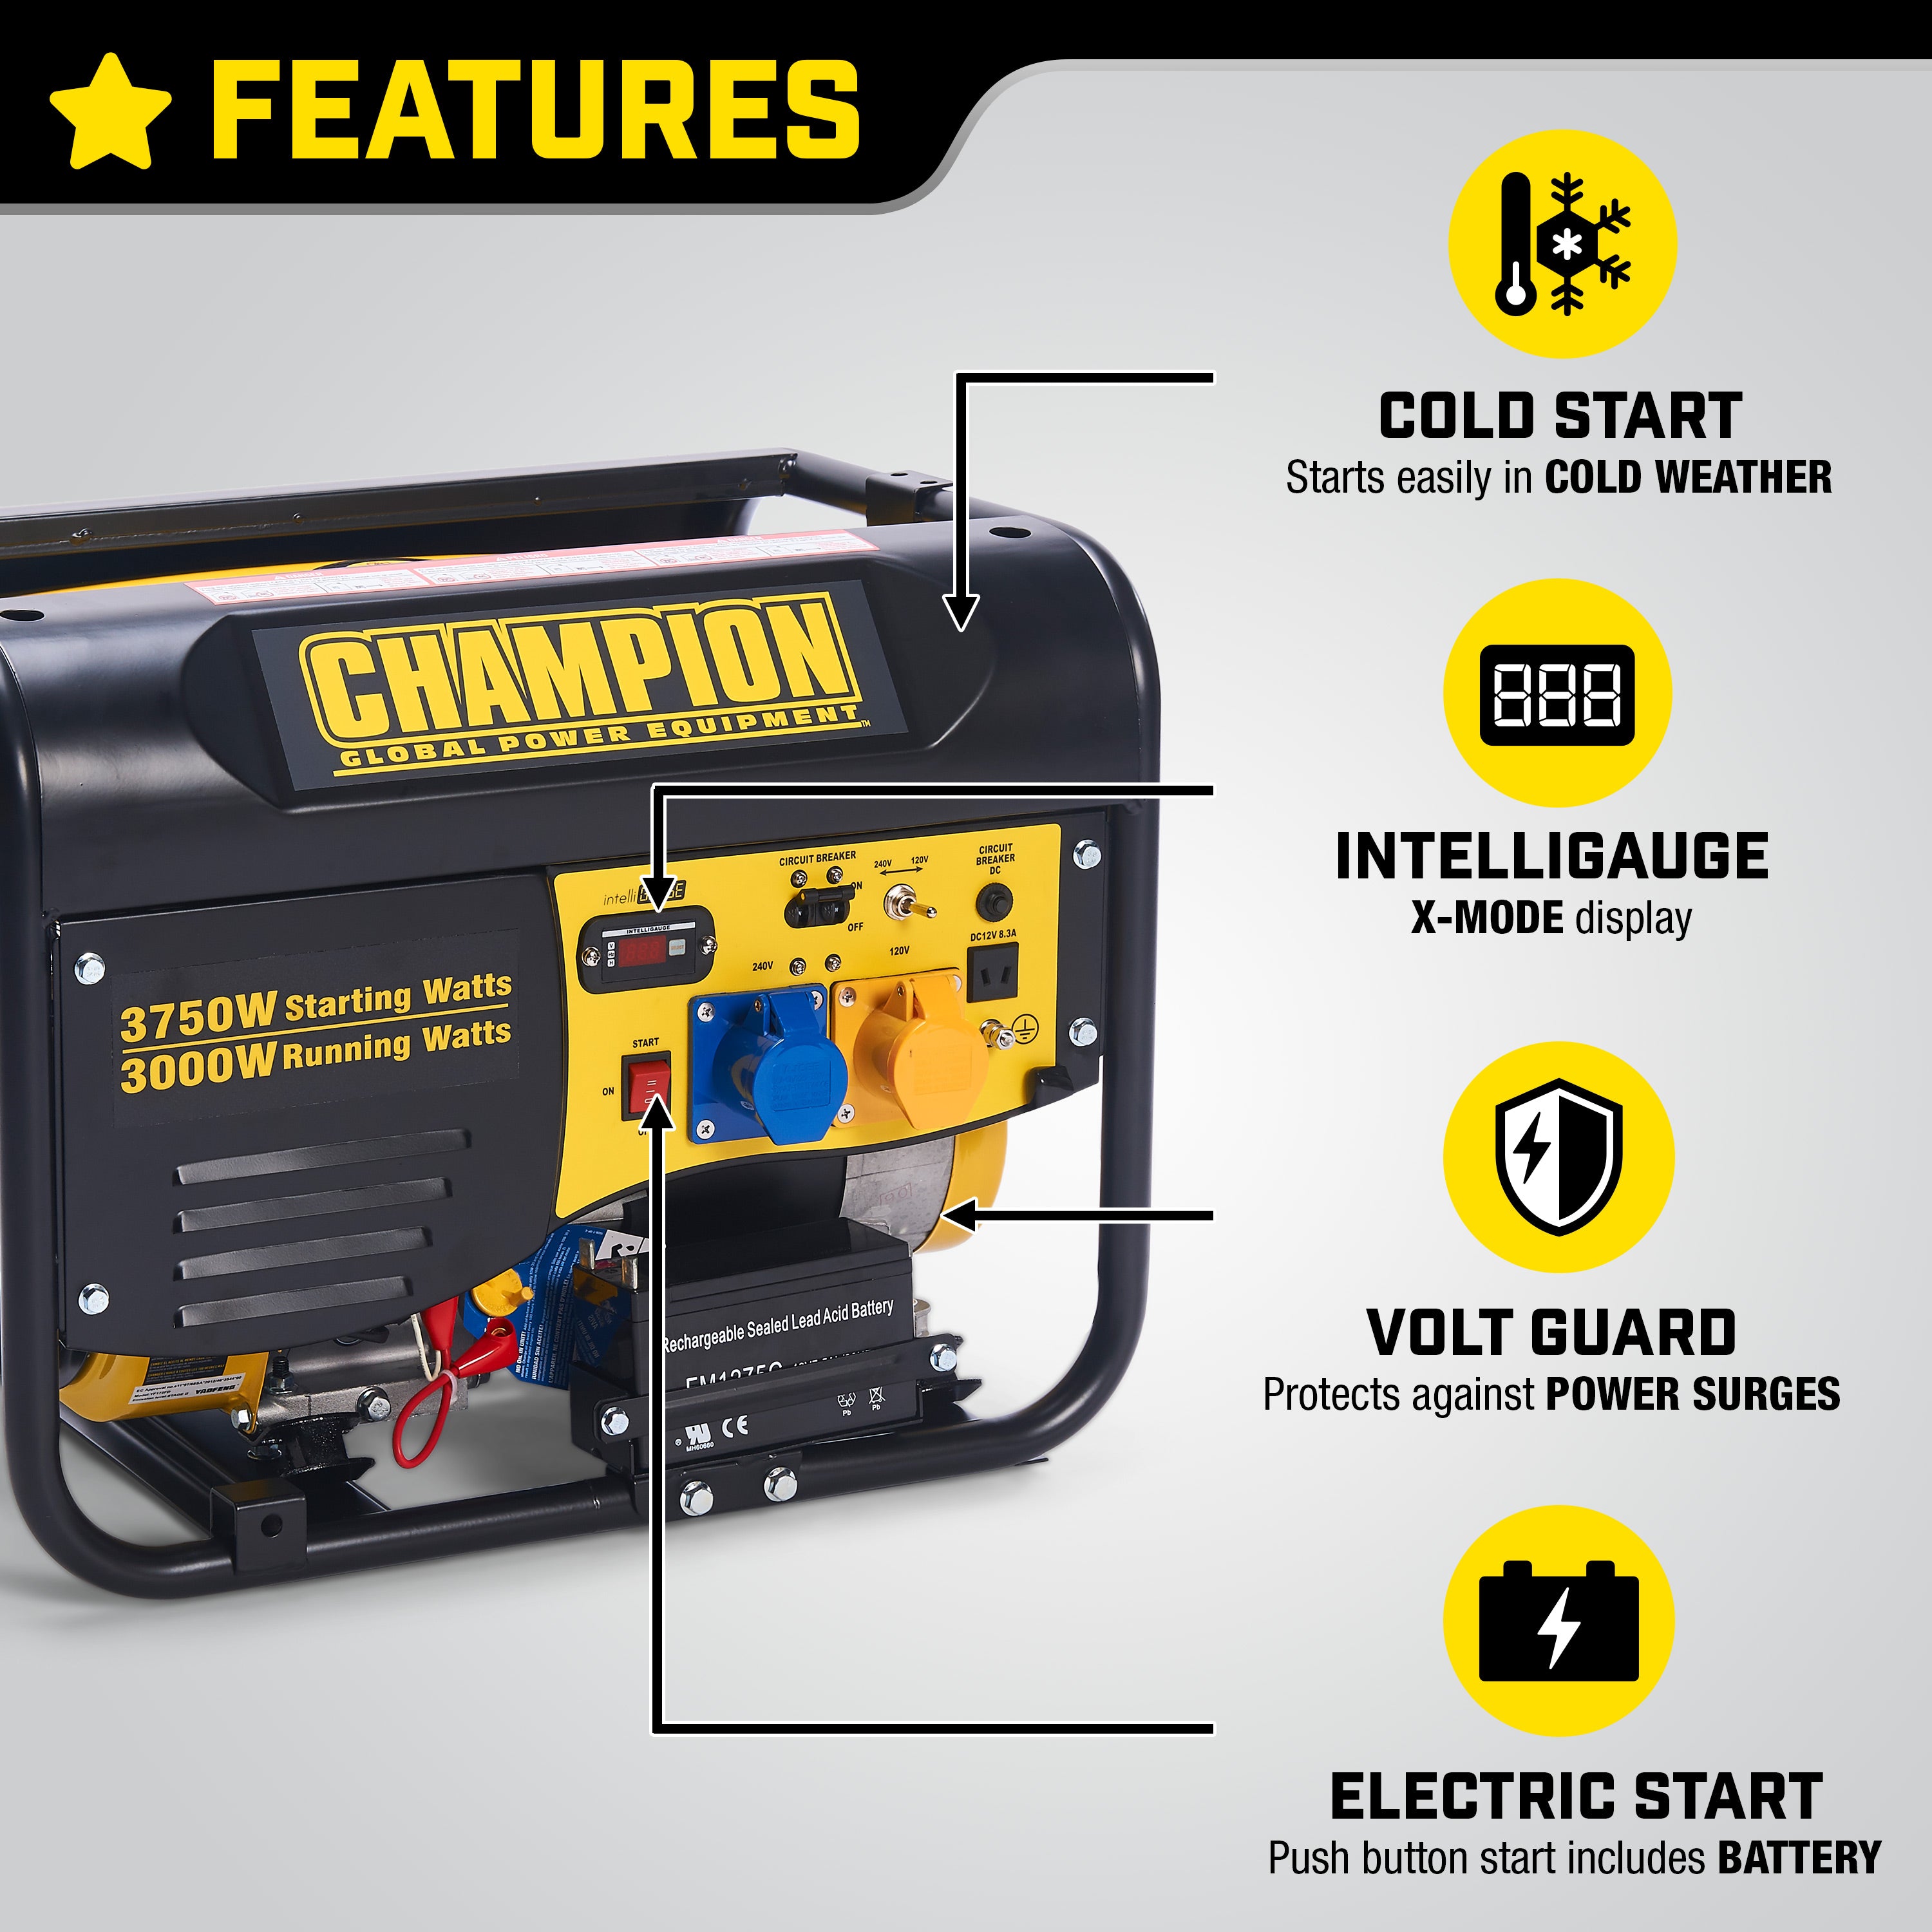 Champion 3500 Watt Petrol Generator features